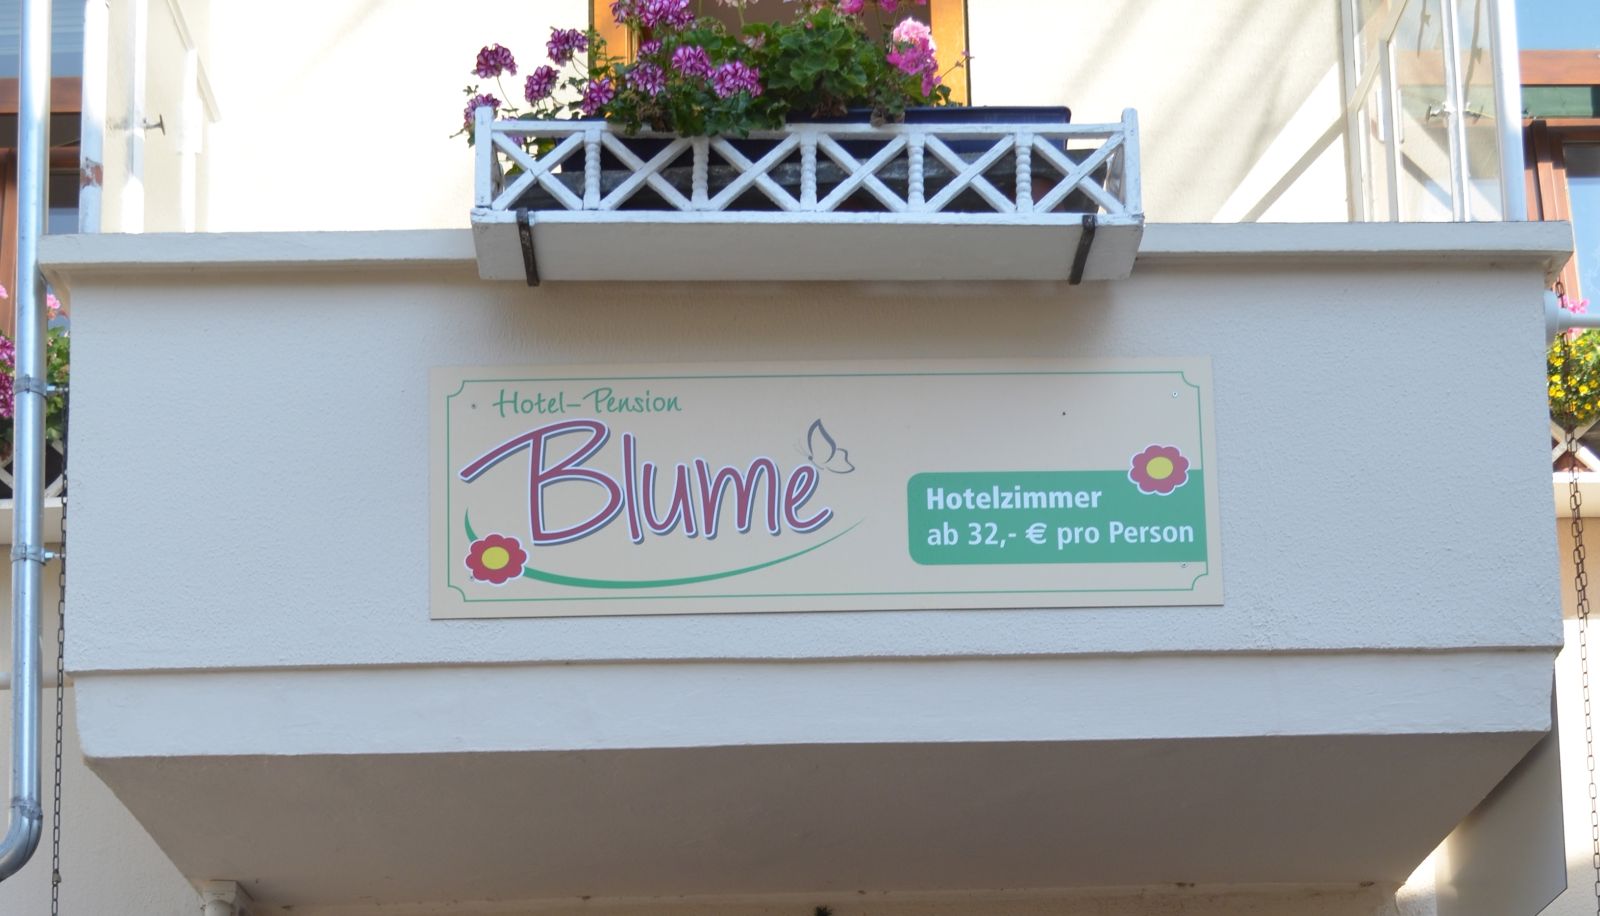 Blume Hotel-Pension (Bad Pyrmont)